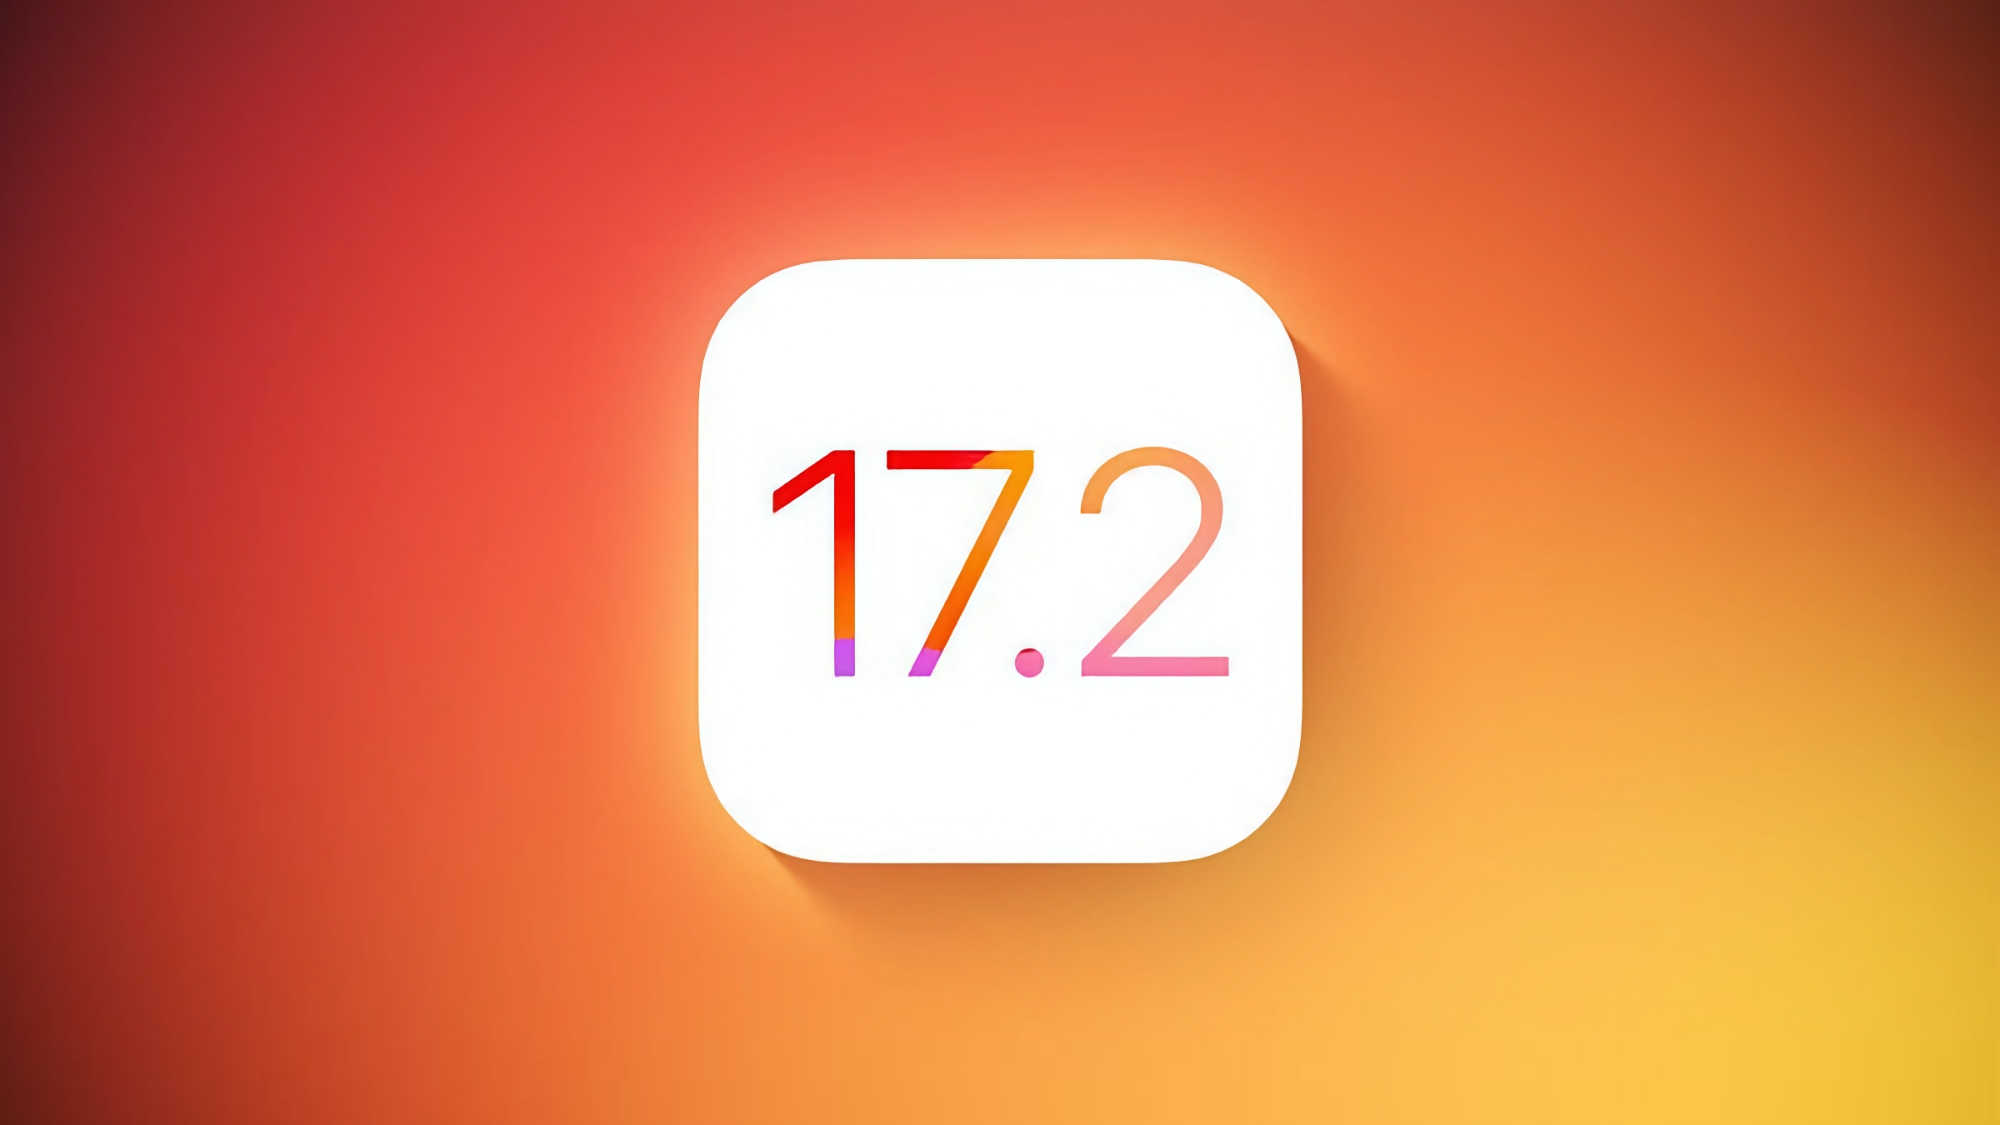 Apple has released iOS 17.2 Beta 3: what's new